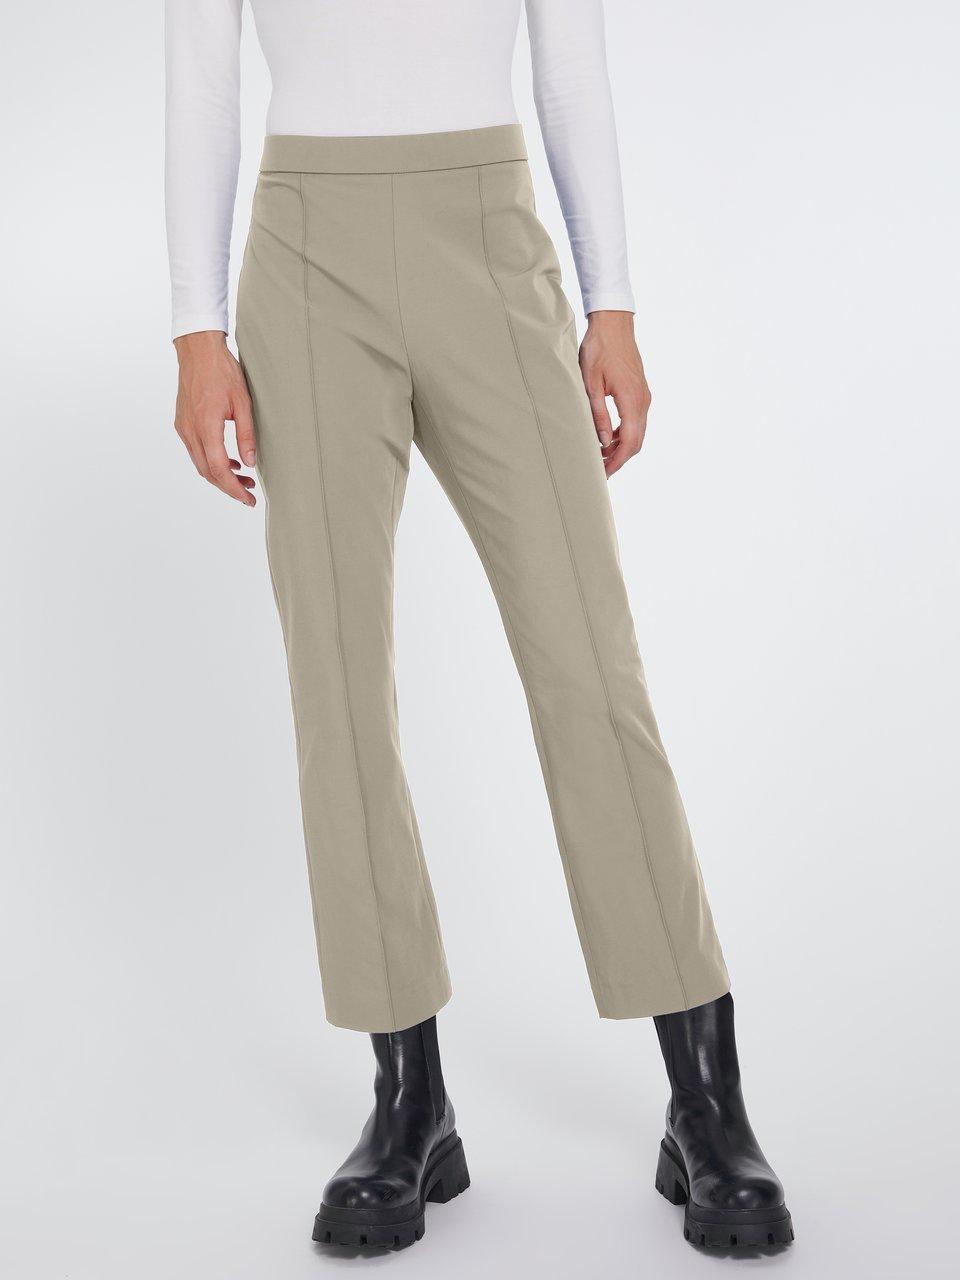 Comfort Stretch Pantalon Femme - Legging longueur 7/8 blanc